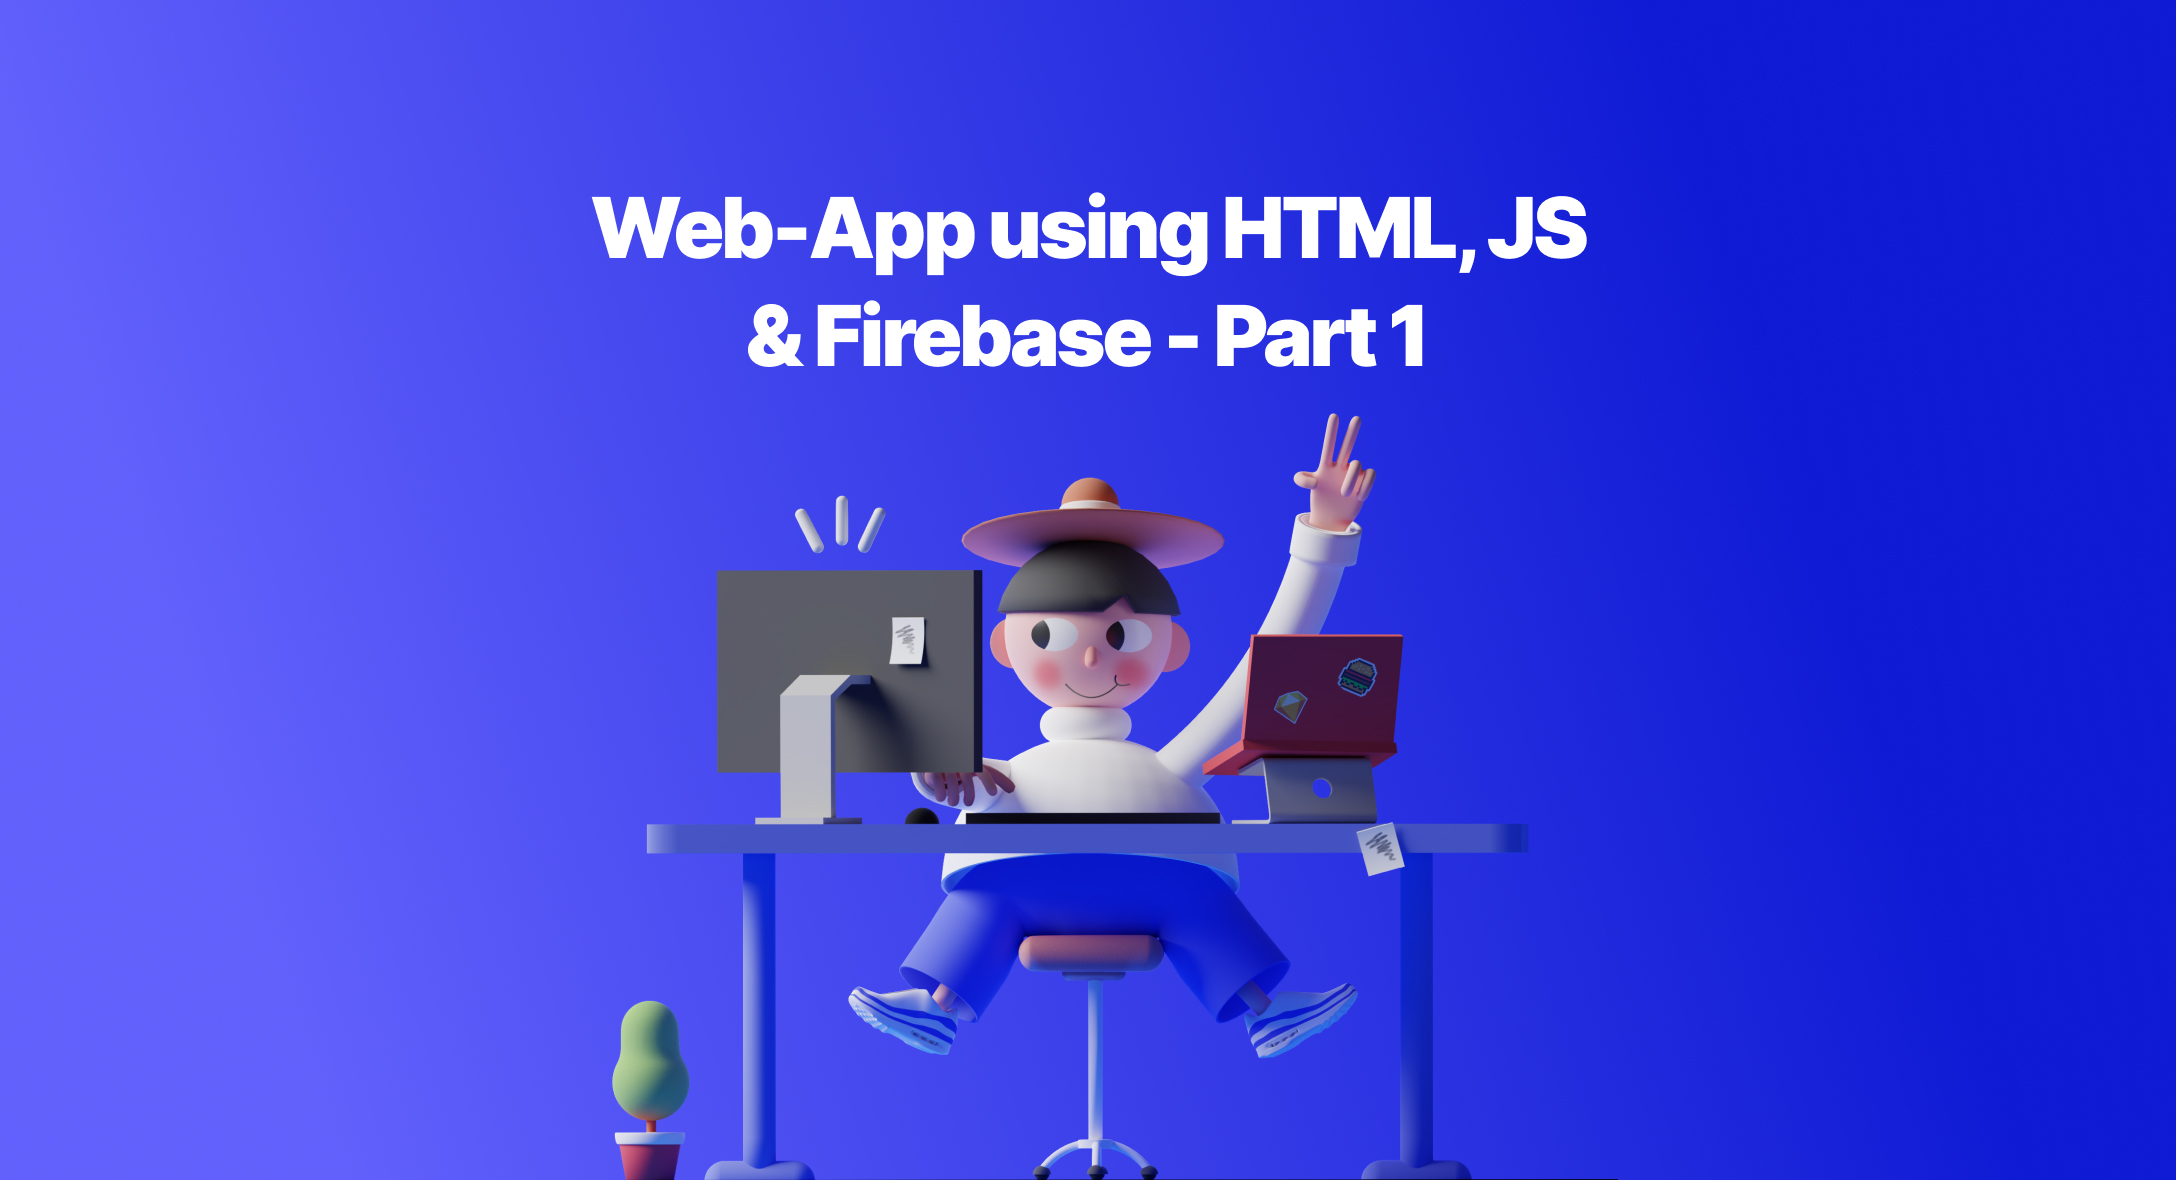 Web-App using HTML, JS & Firebase - Part 1